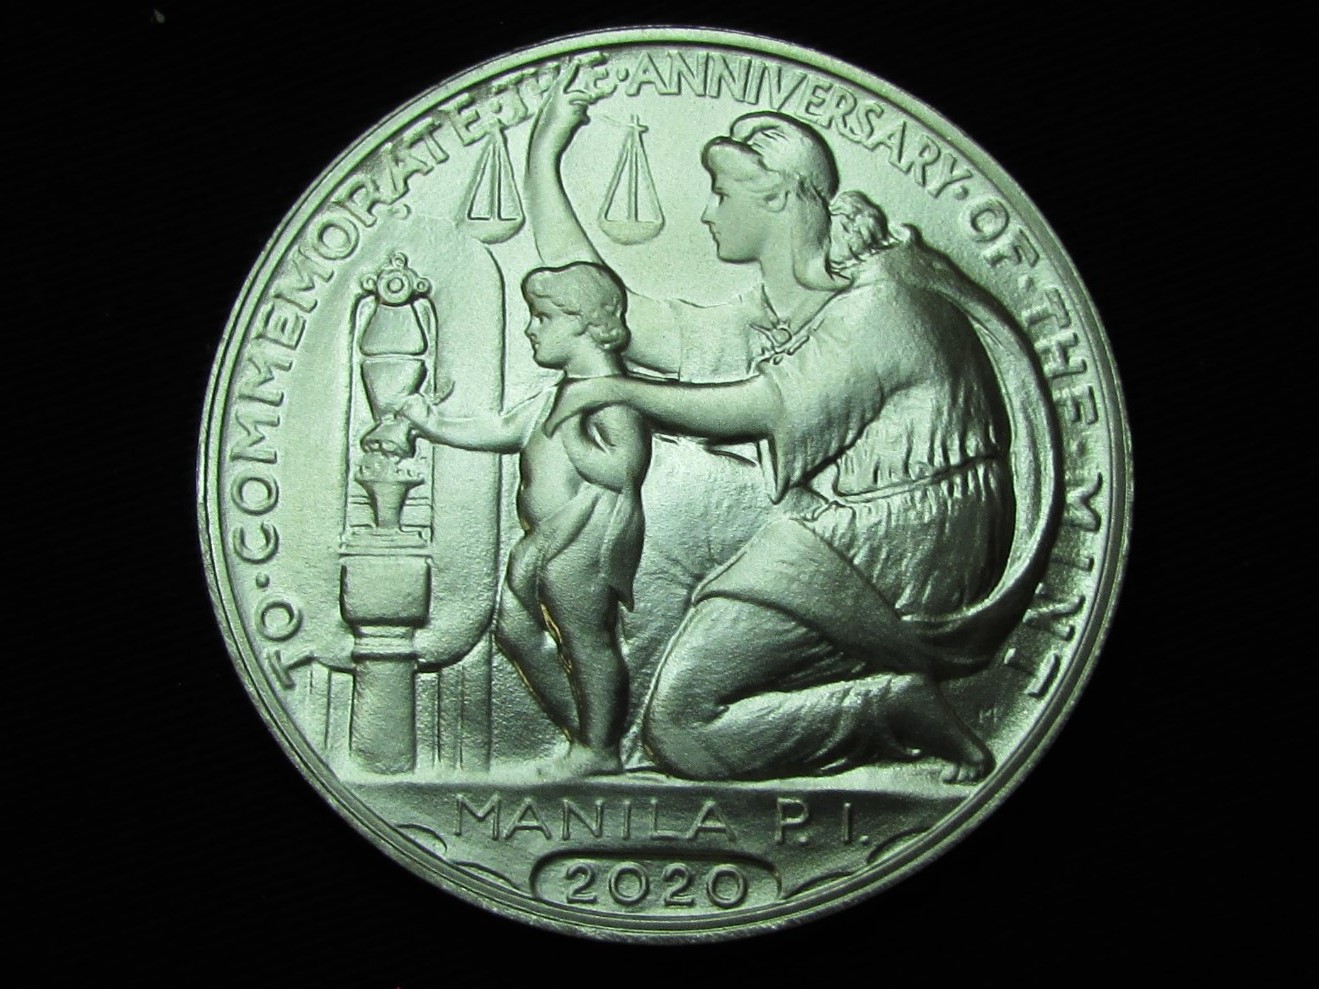 2020 Wilson 100 Year Anniversary Medal (Silver Gilt) - reverse.JPG